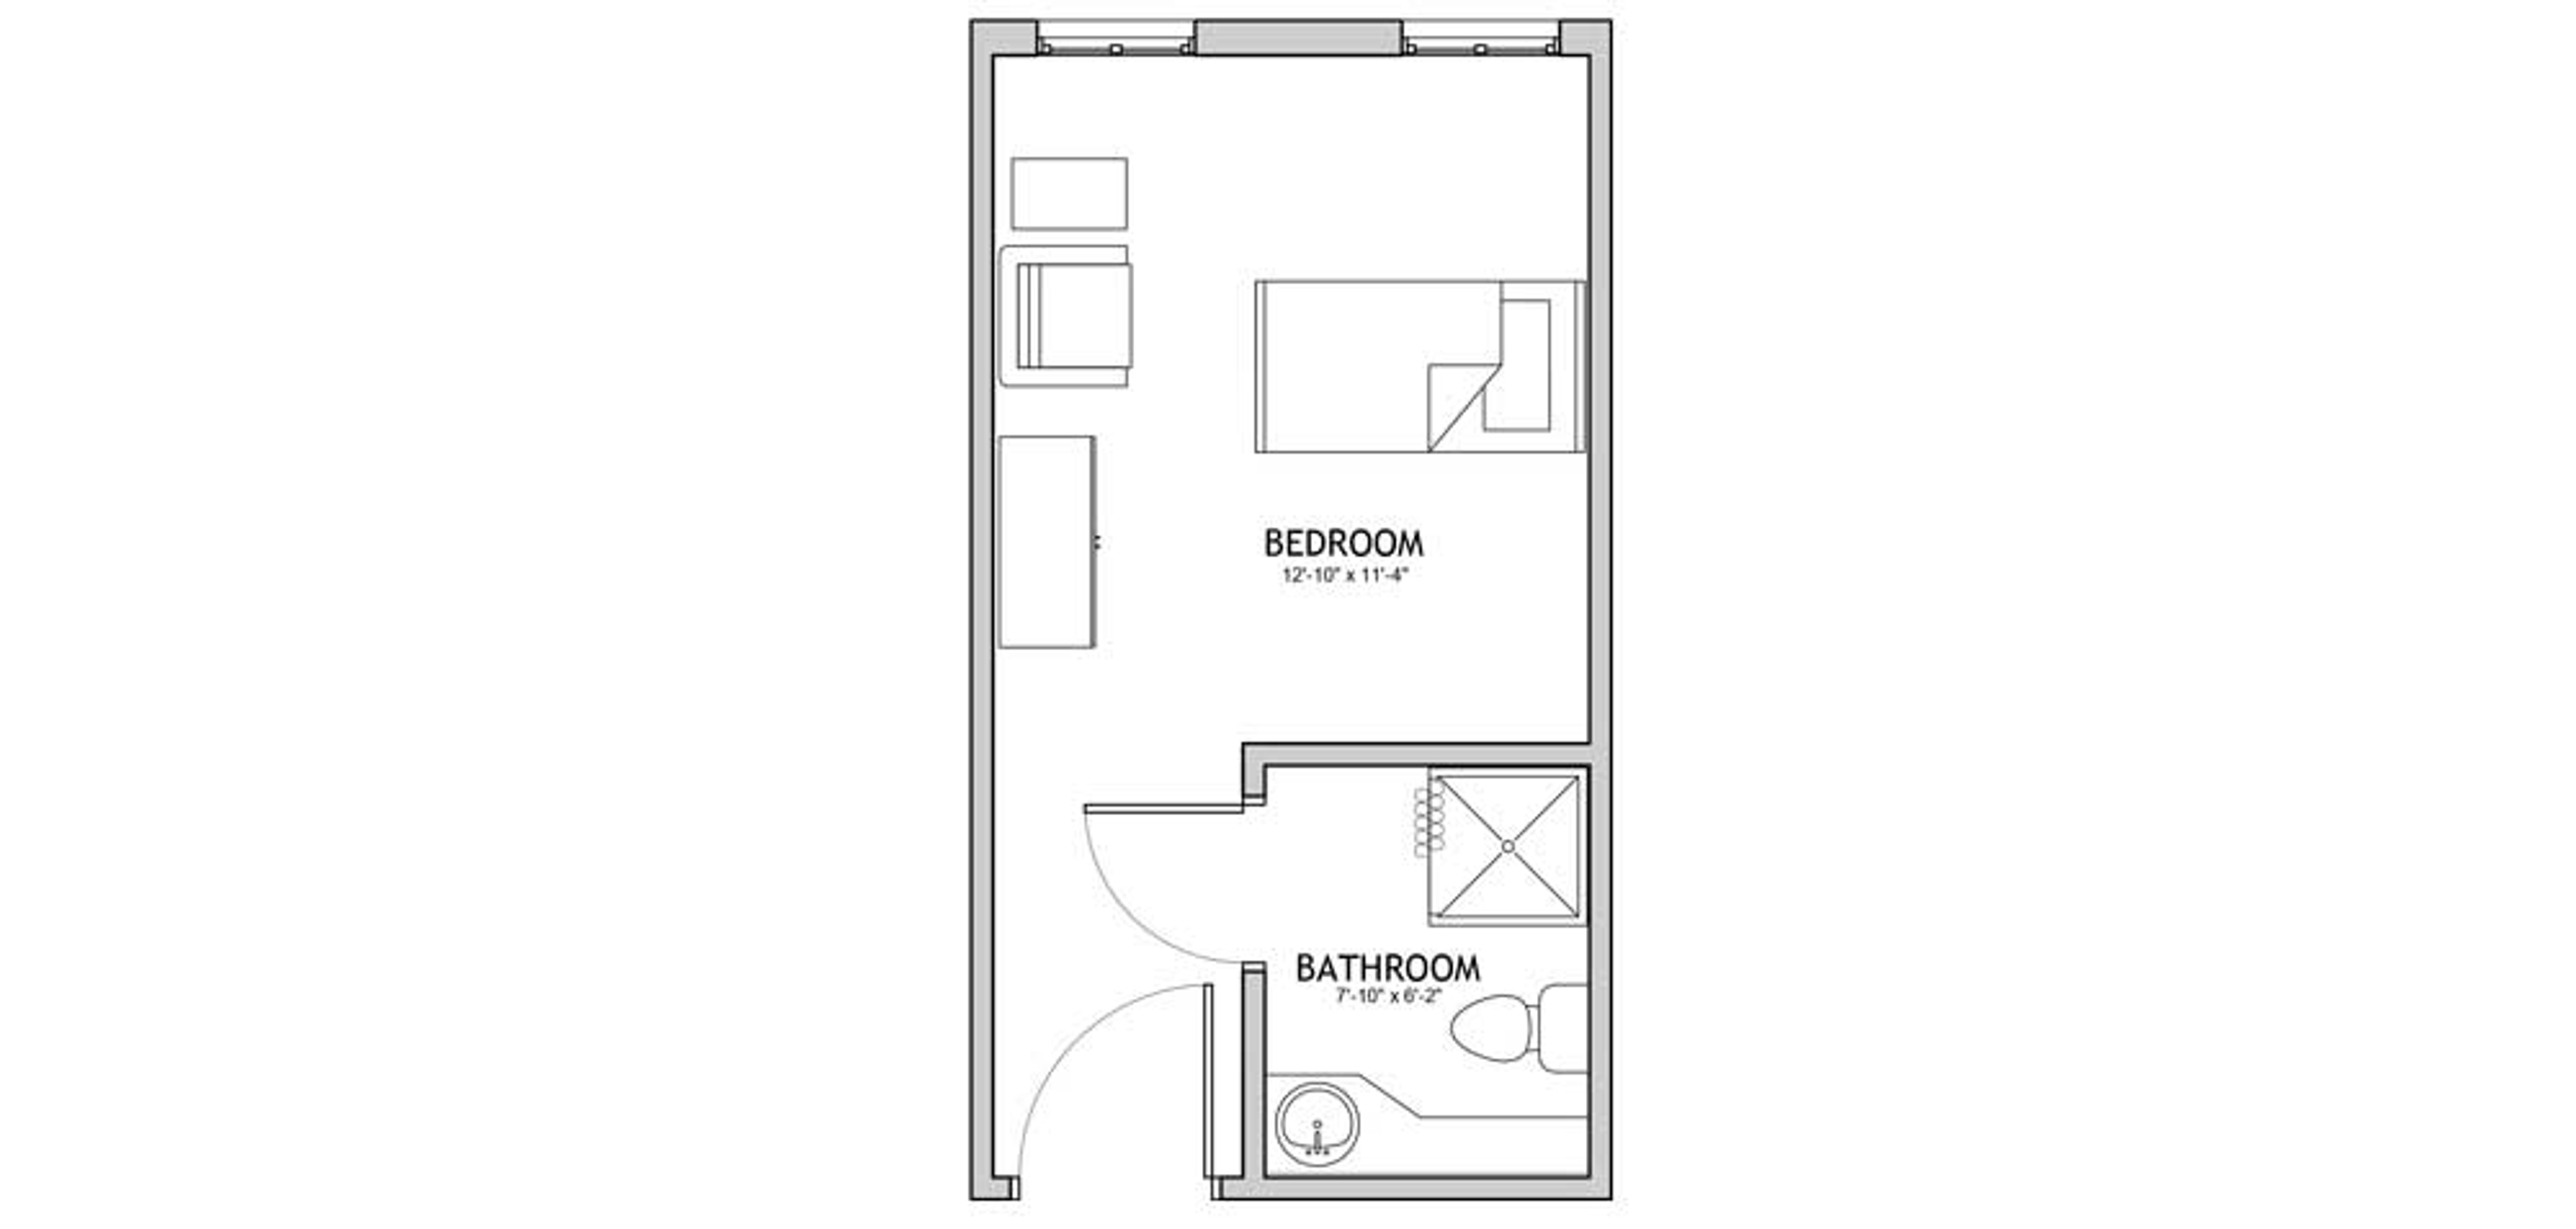 Floorplan - The Auberge at Aspen Park - Private Suite, 263 sq. ft. Memory Care